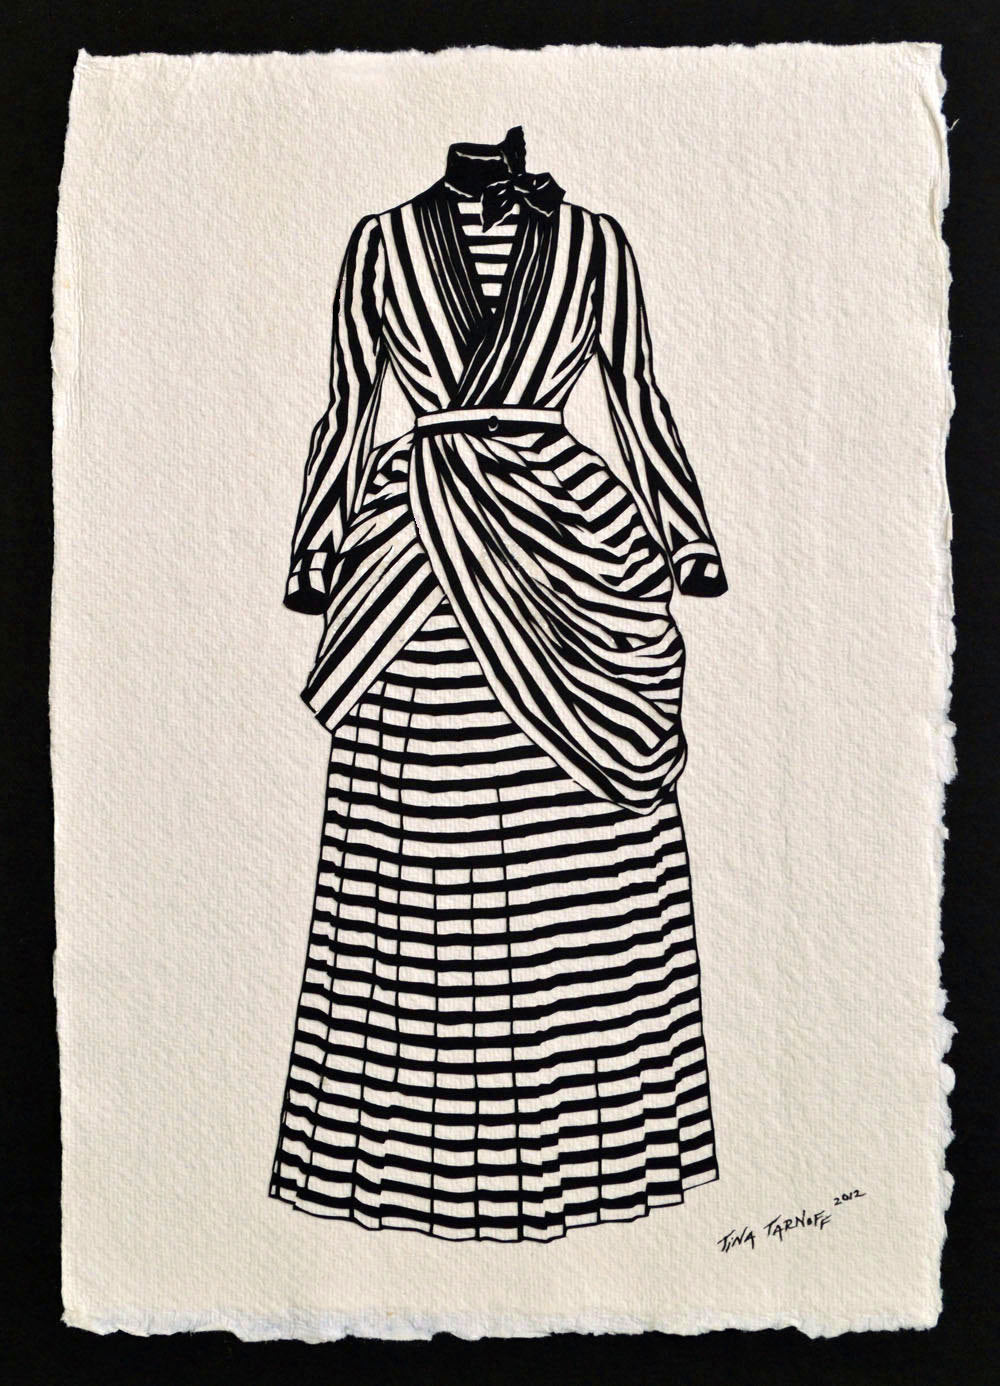 VICTORIAN DRESS Papercut - Hand-Cut Silhouette